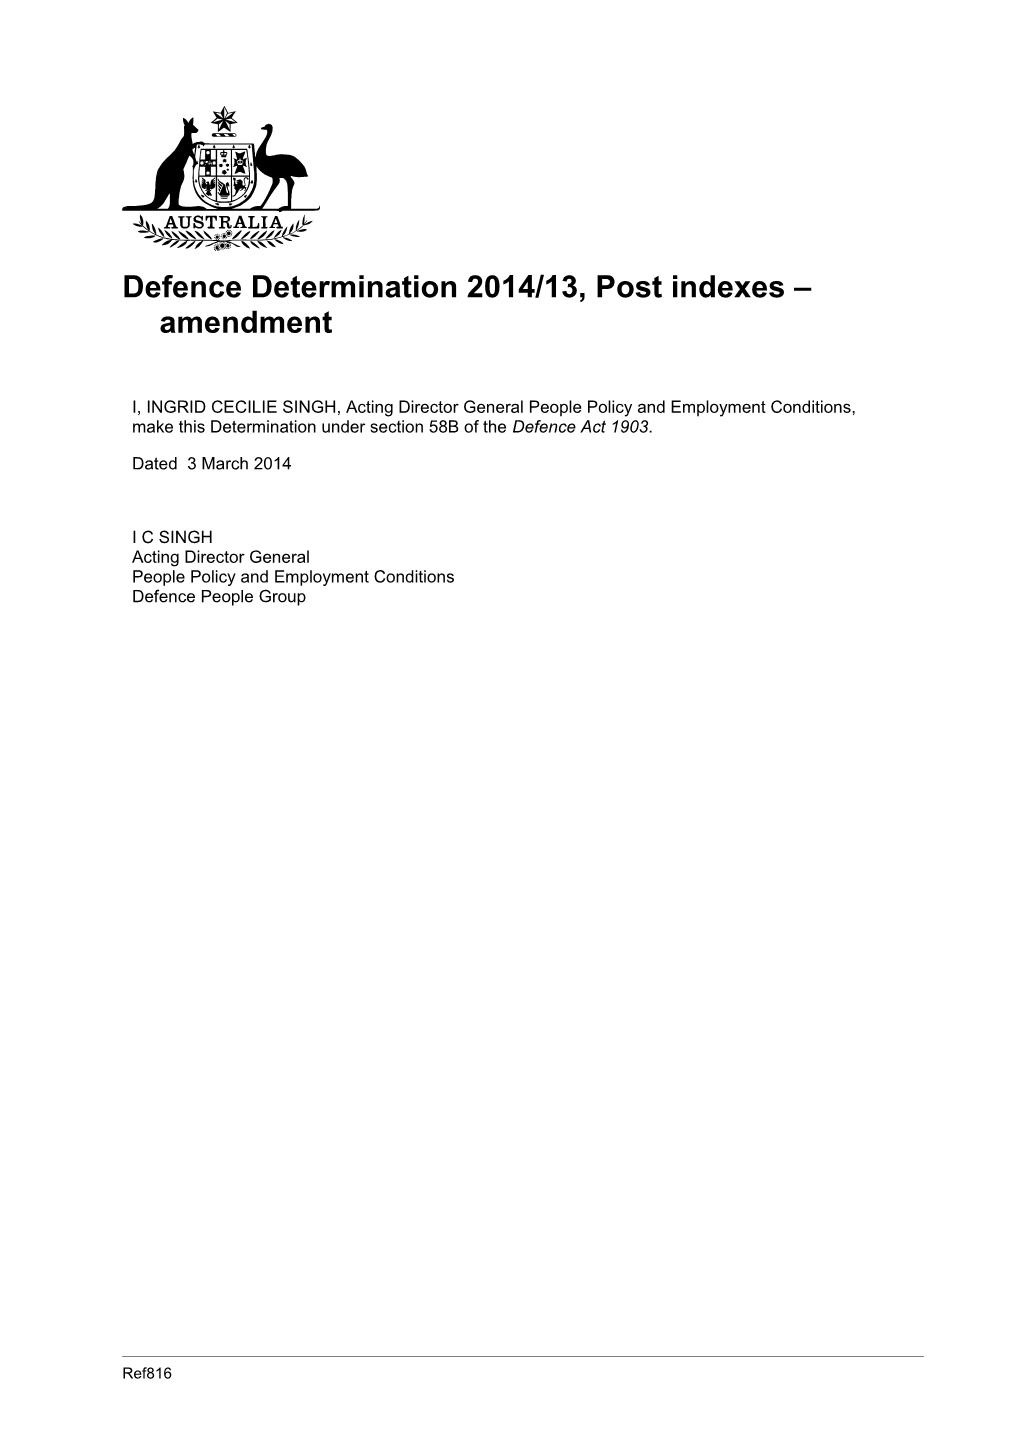 Defence Determination 2014/13, Post Indexes Amendment